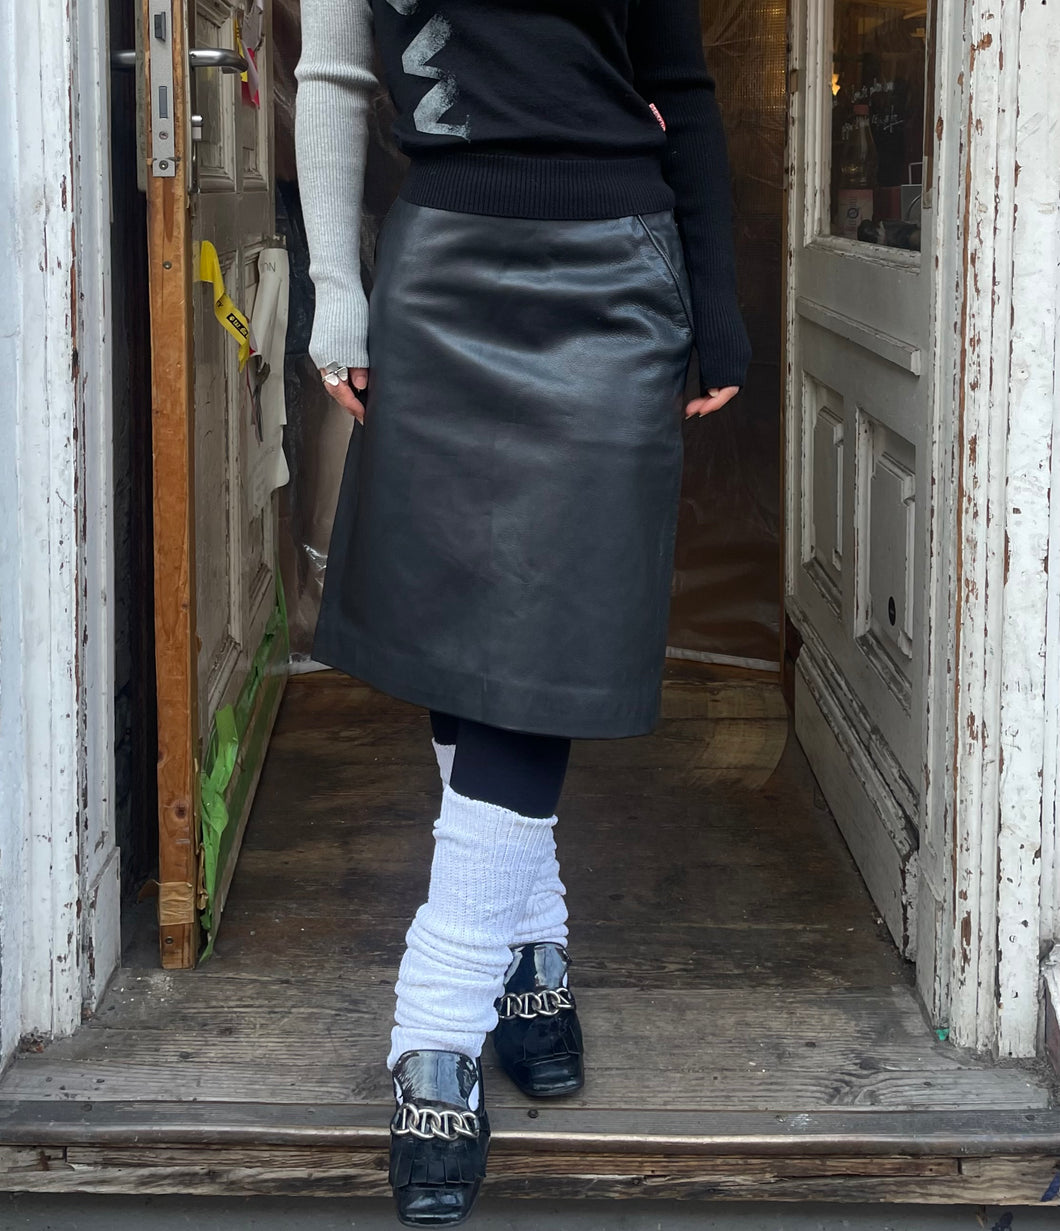 Replica leather skirt by Maison Martin Margiela